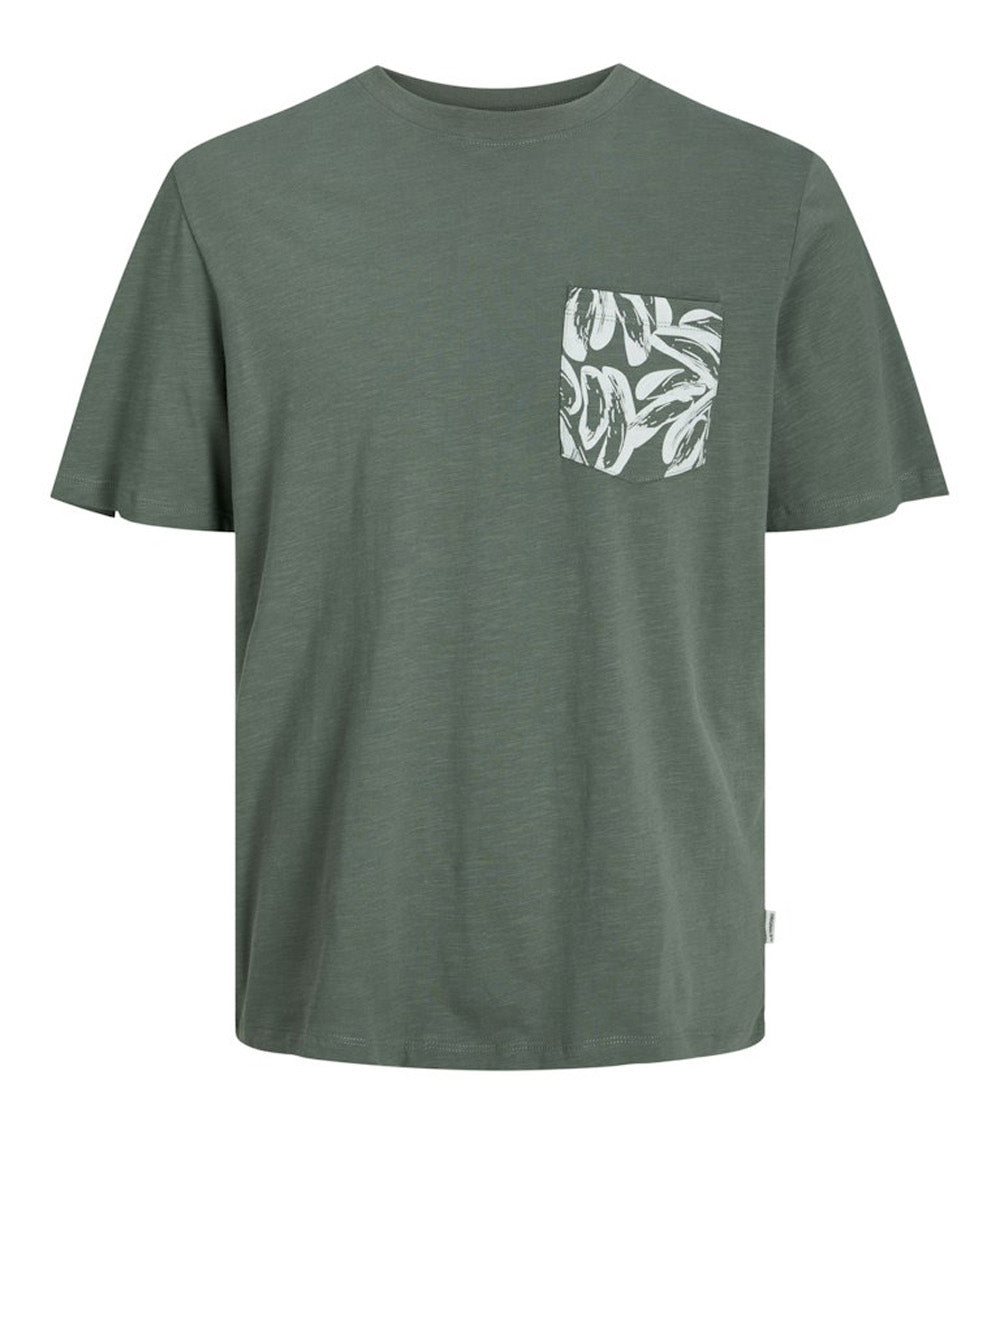 JACK&JONES T-shirt Uomo - Verde modello 12250435